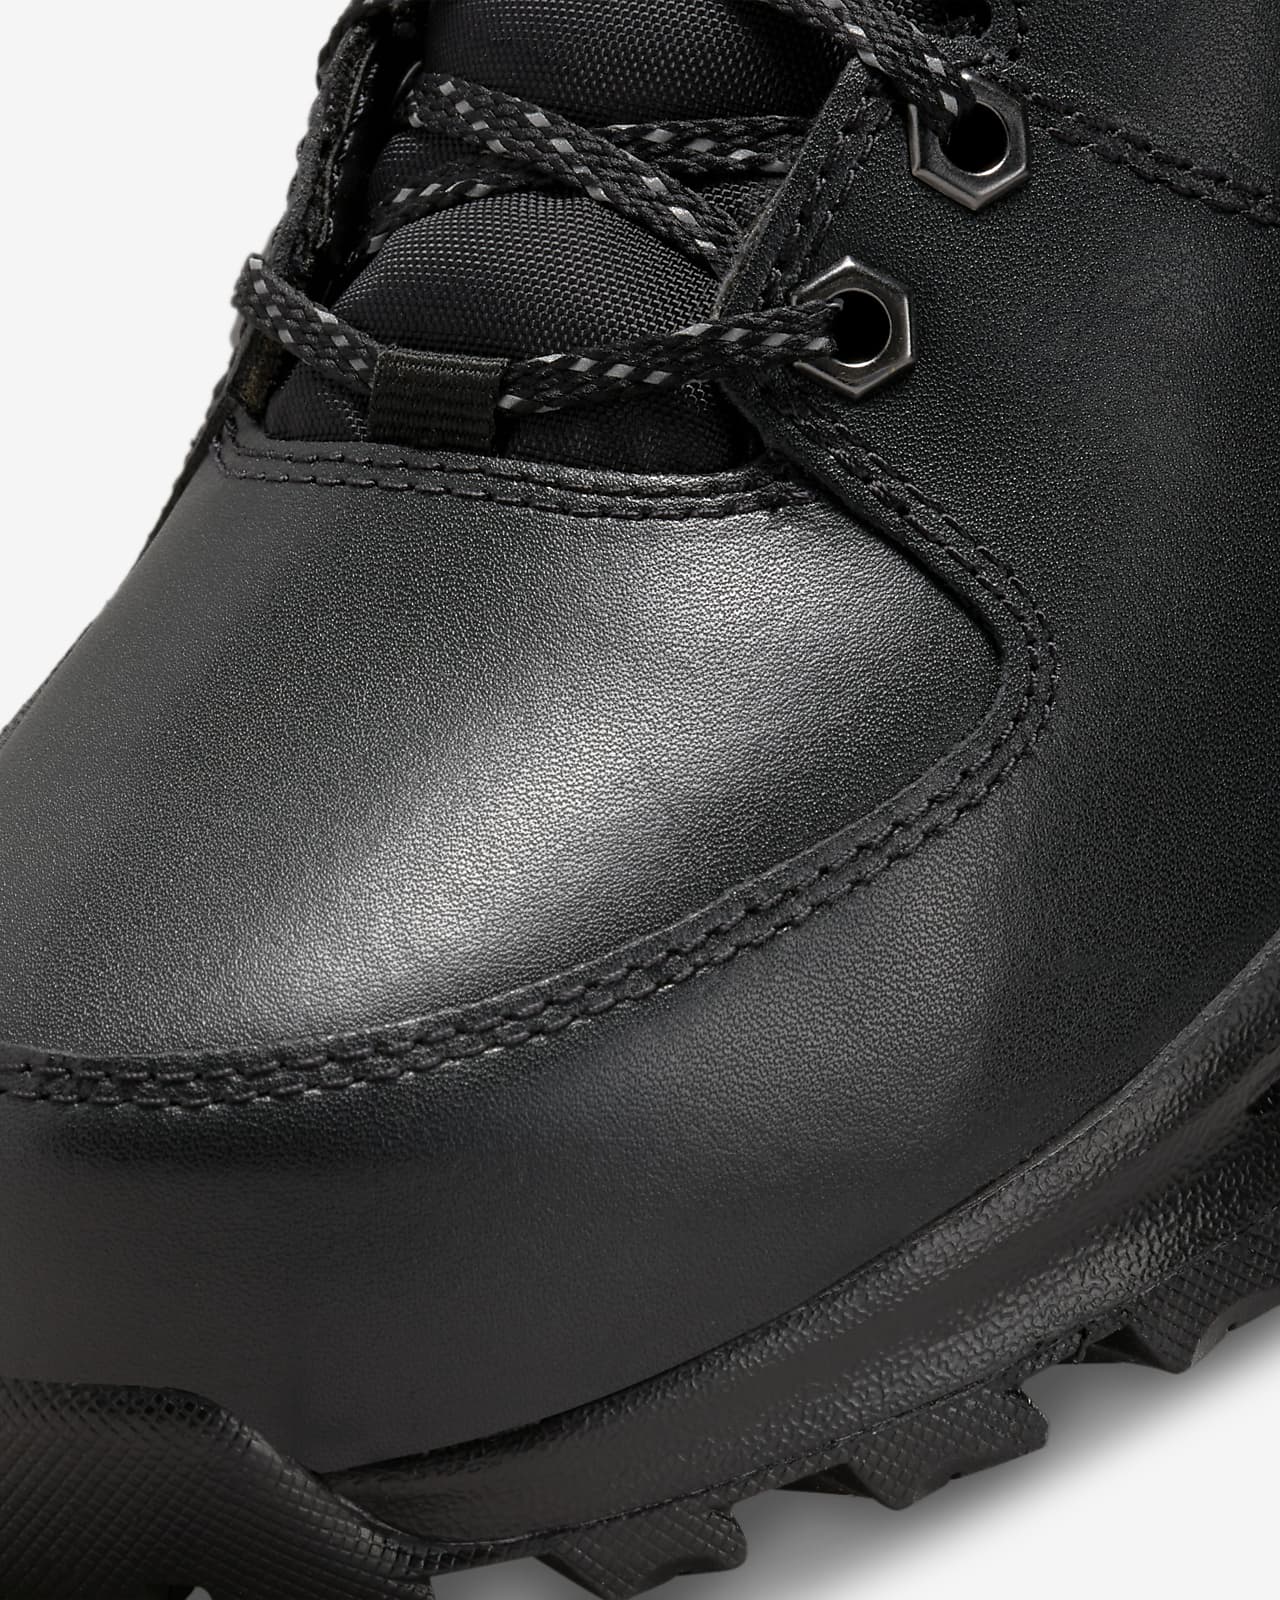 vorm zwart vonk Nike Manoa Leather SE Men's Boots. Nike.com